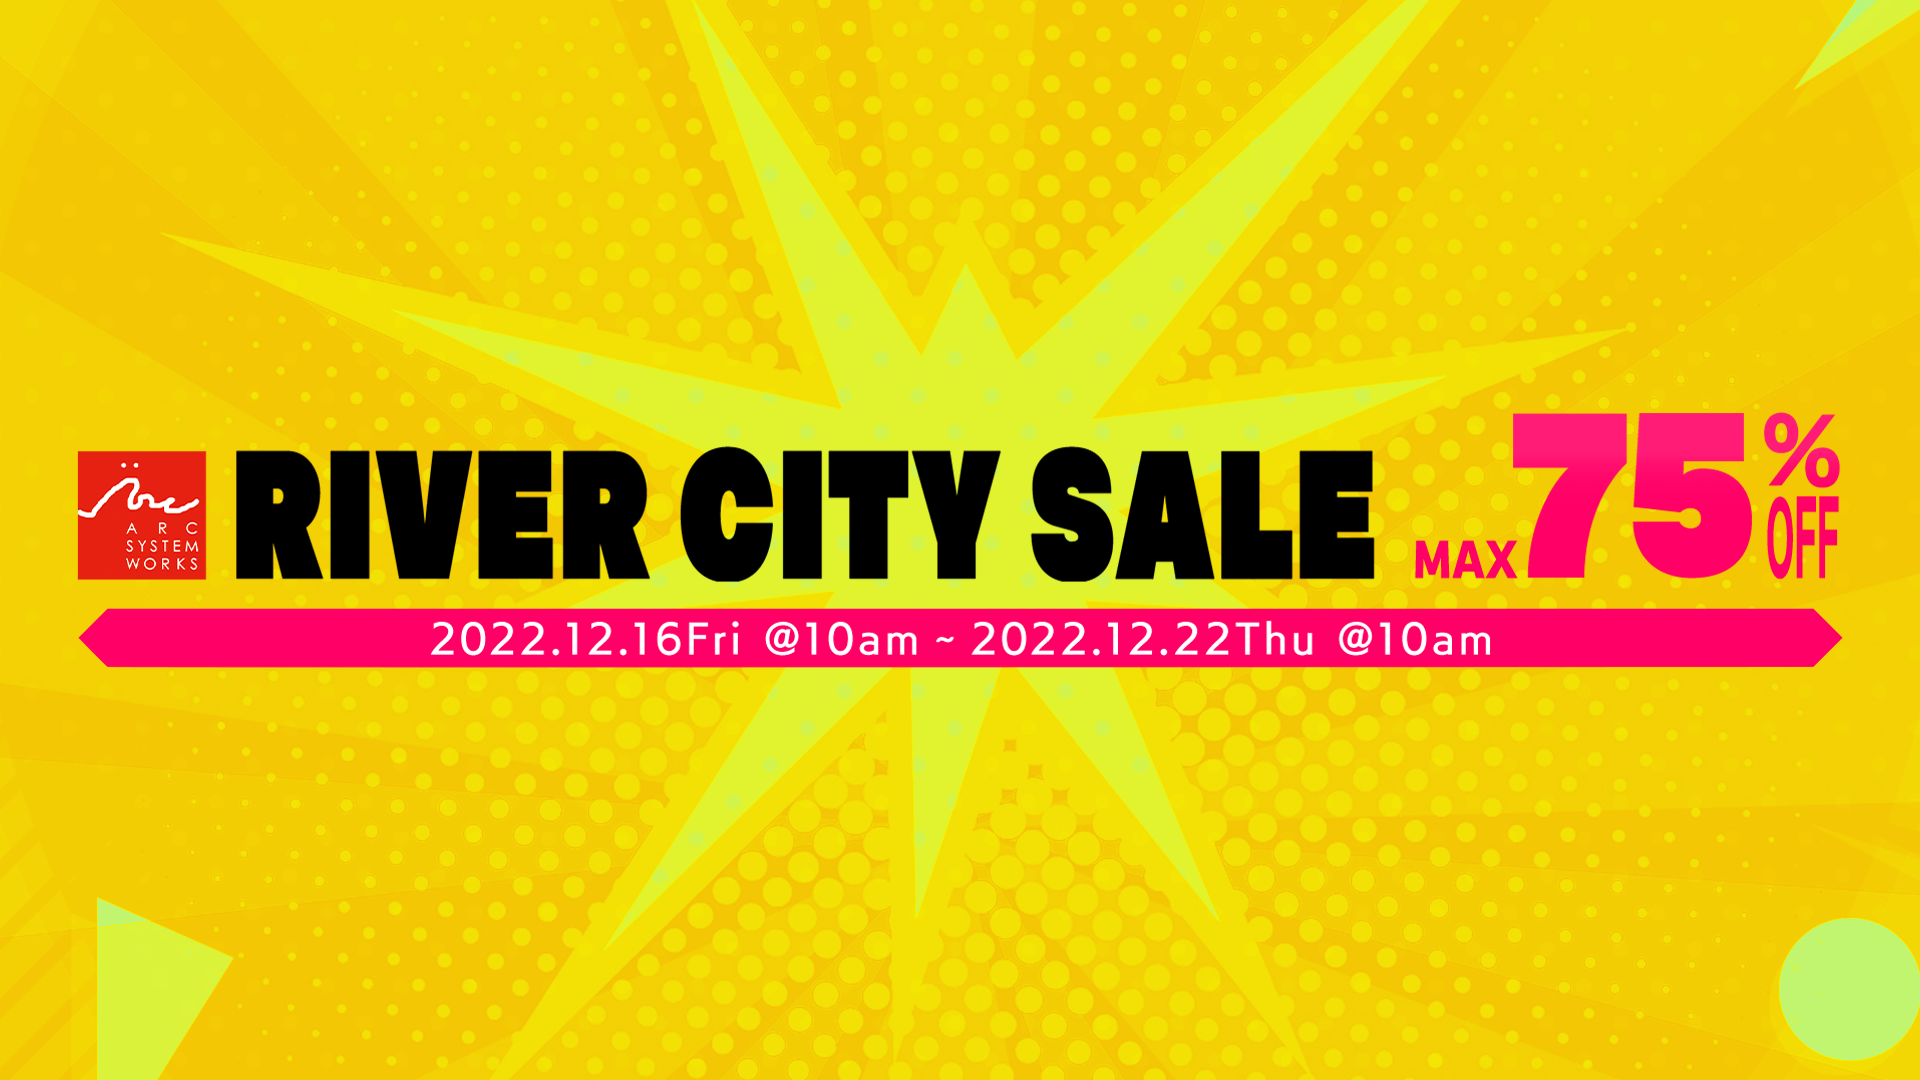 River City Saga Sale on Steam!